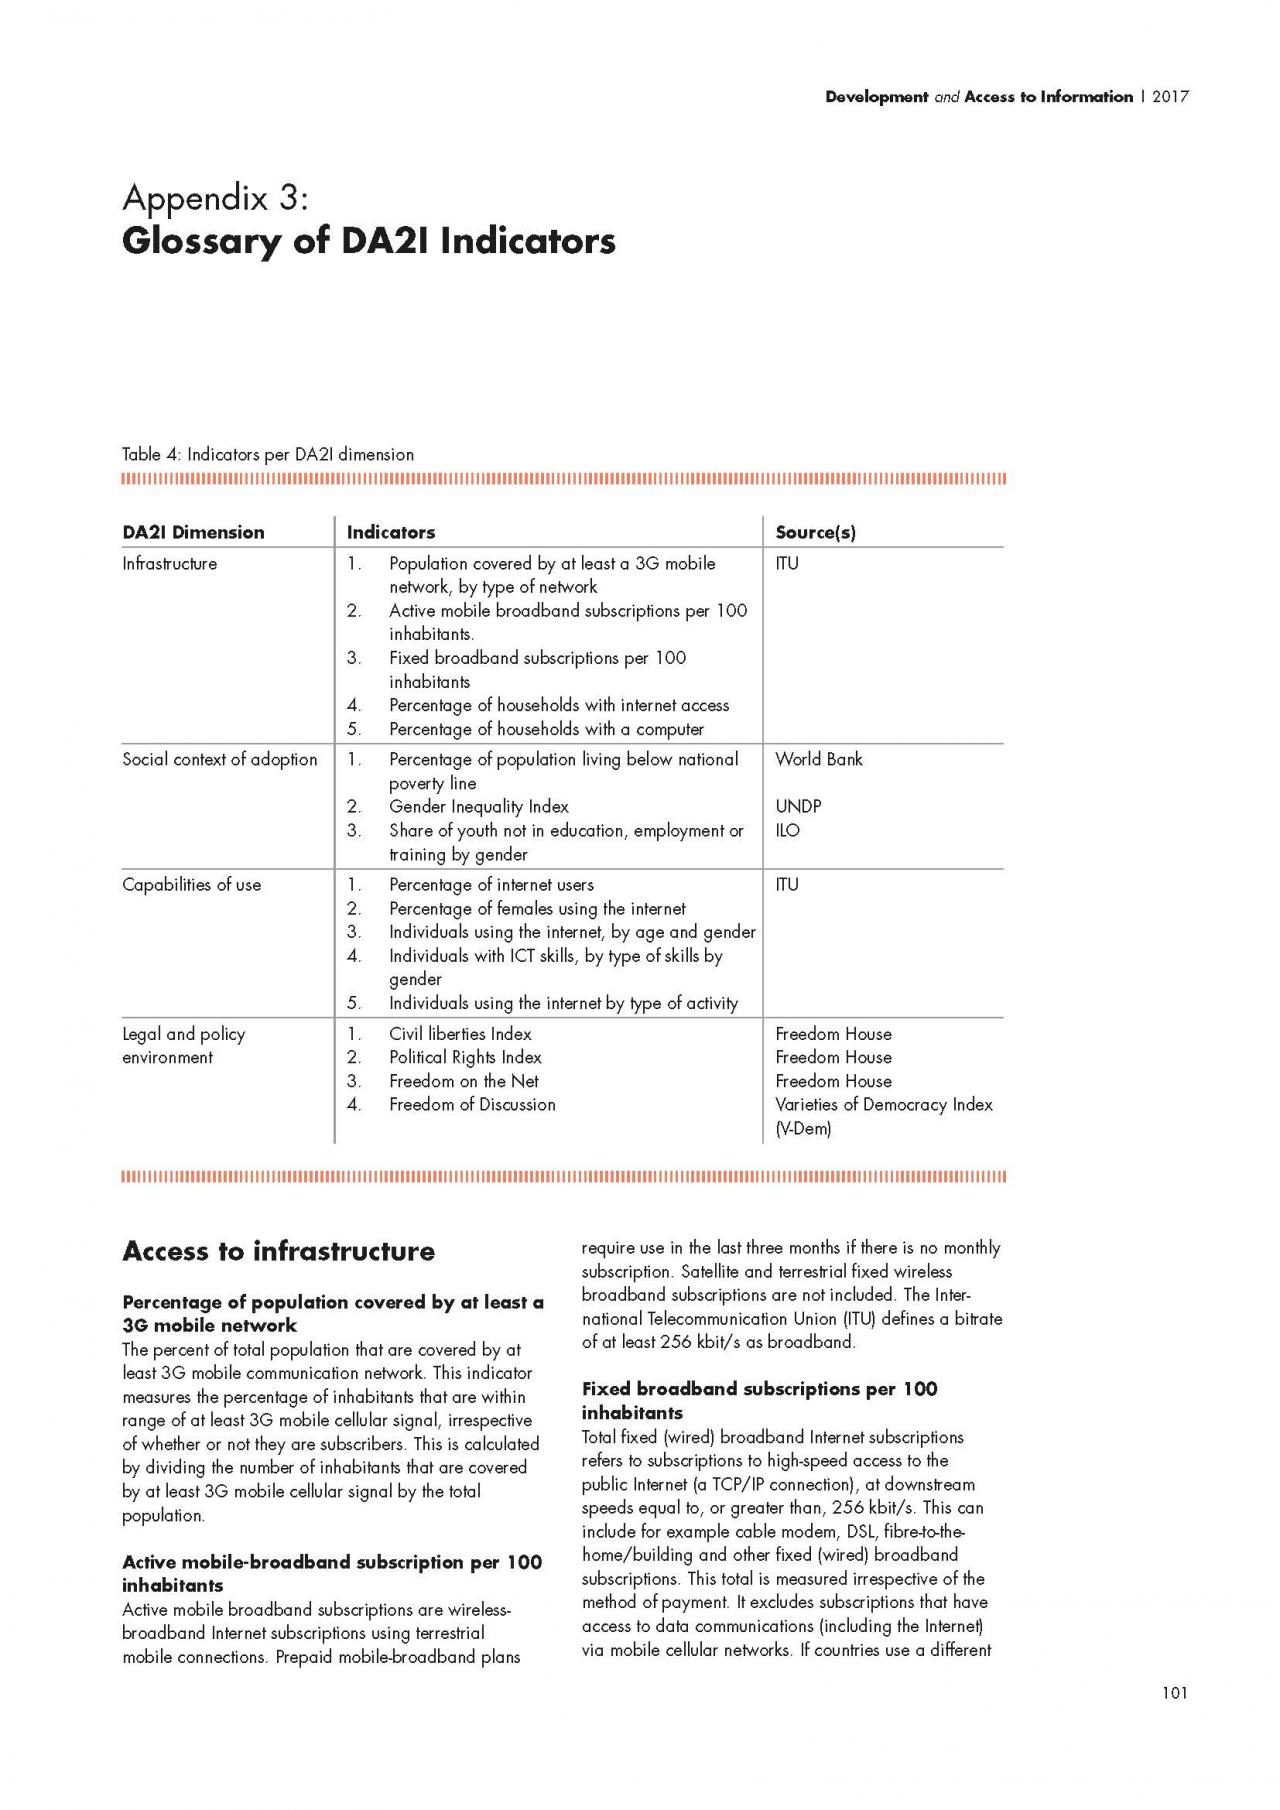 Appendix 3: Glossary of DA2I Indicators